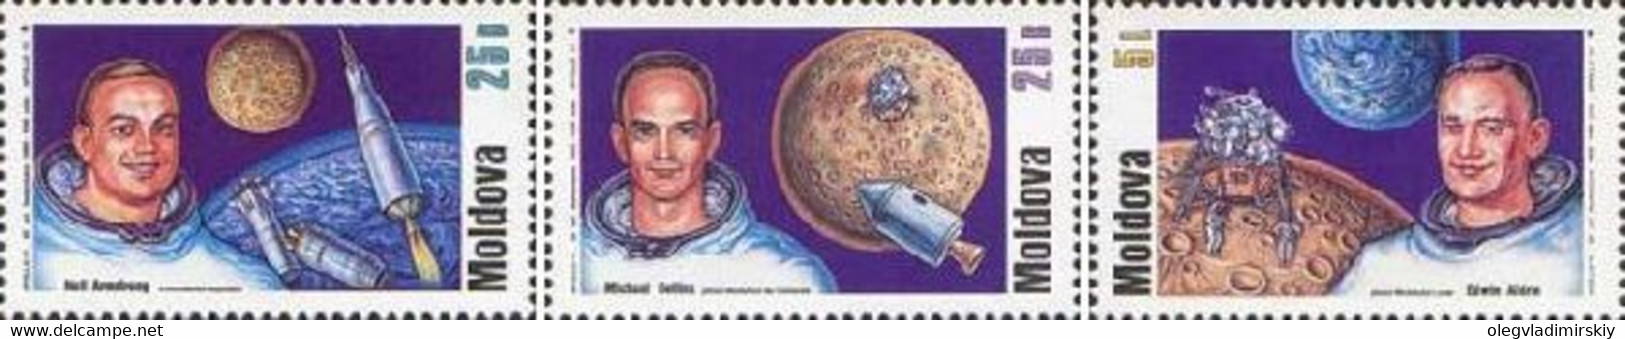 Moldavia Moldova 1999 30th Of The Moon Landing Set Of 3 Stamps - United States